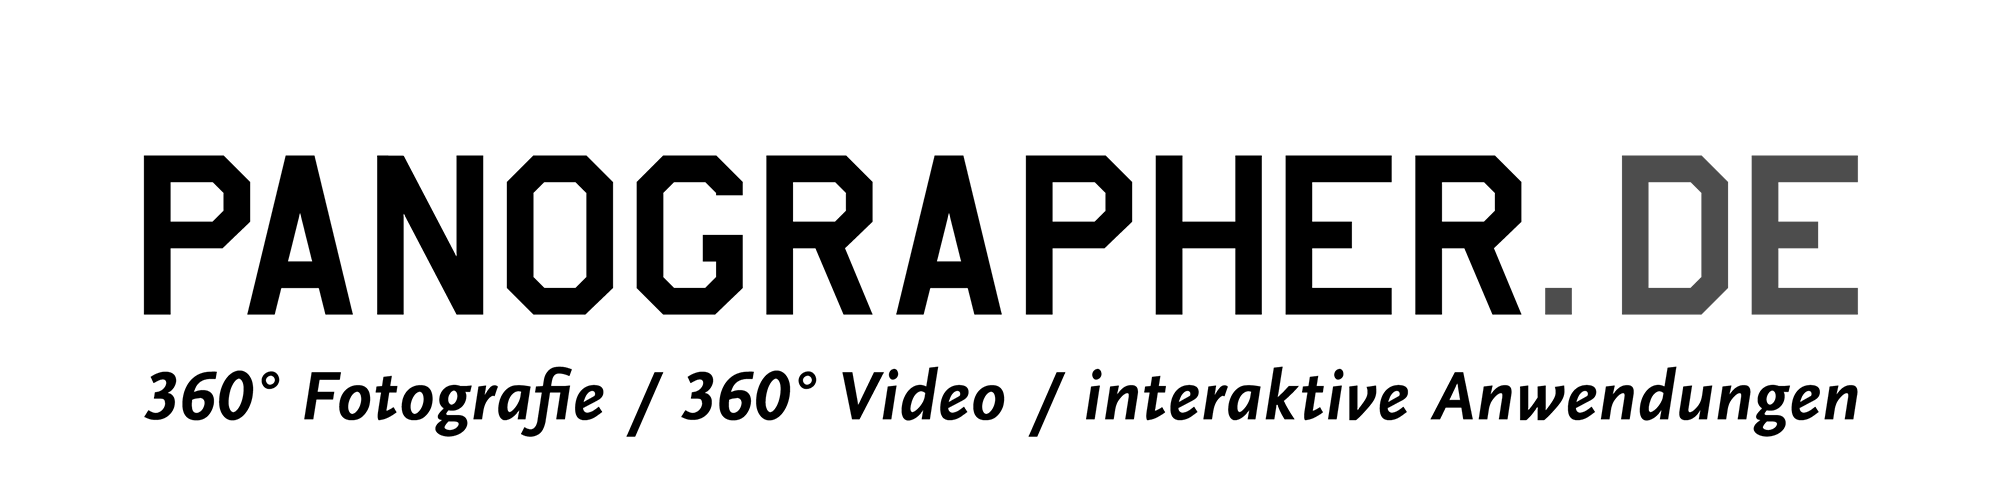 Panographer-Logo-BW.png